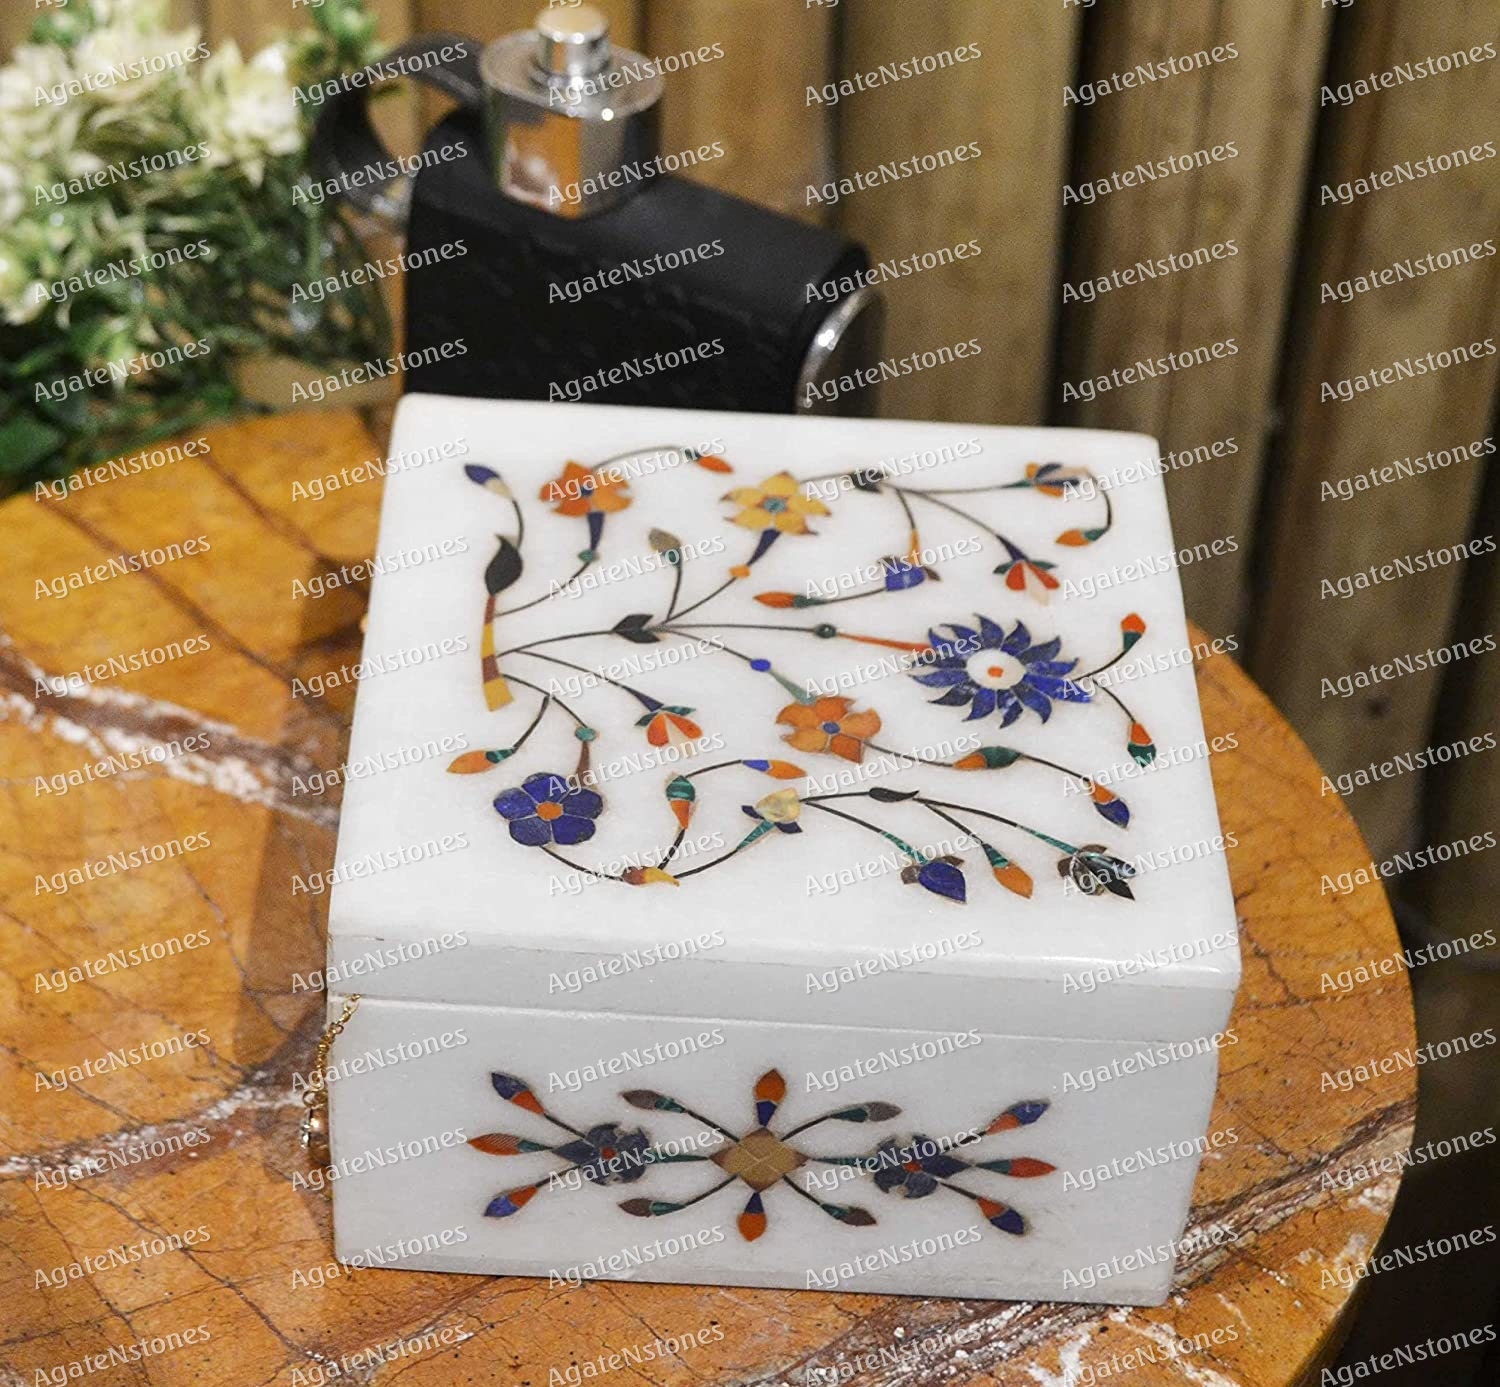 Marble Jewelry Box Pietra dura Lapis Inlay Stone Handicraft Home Decor Gift 